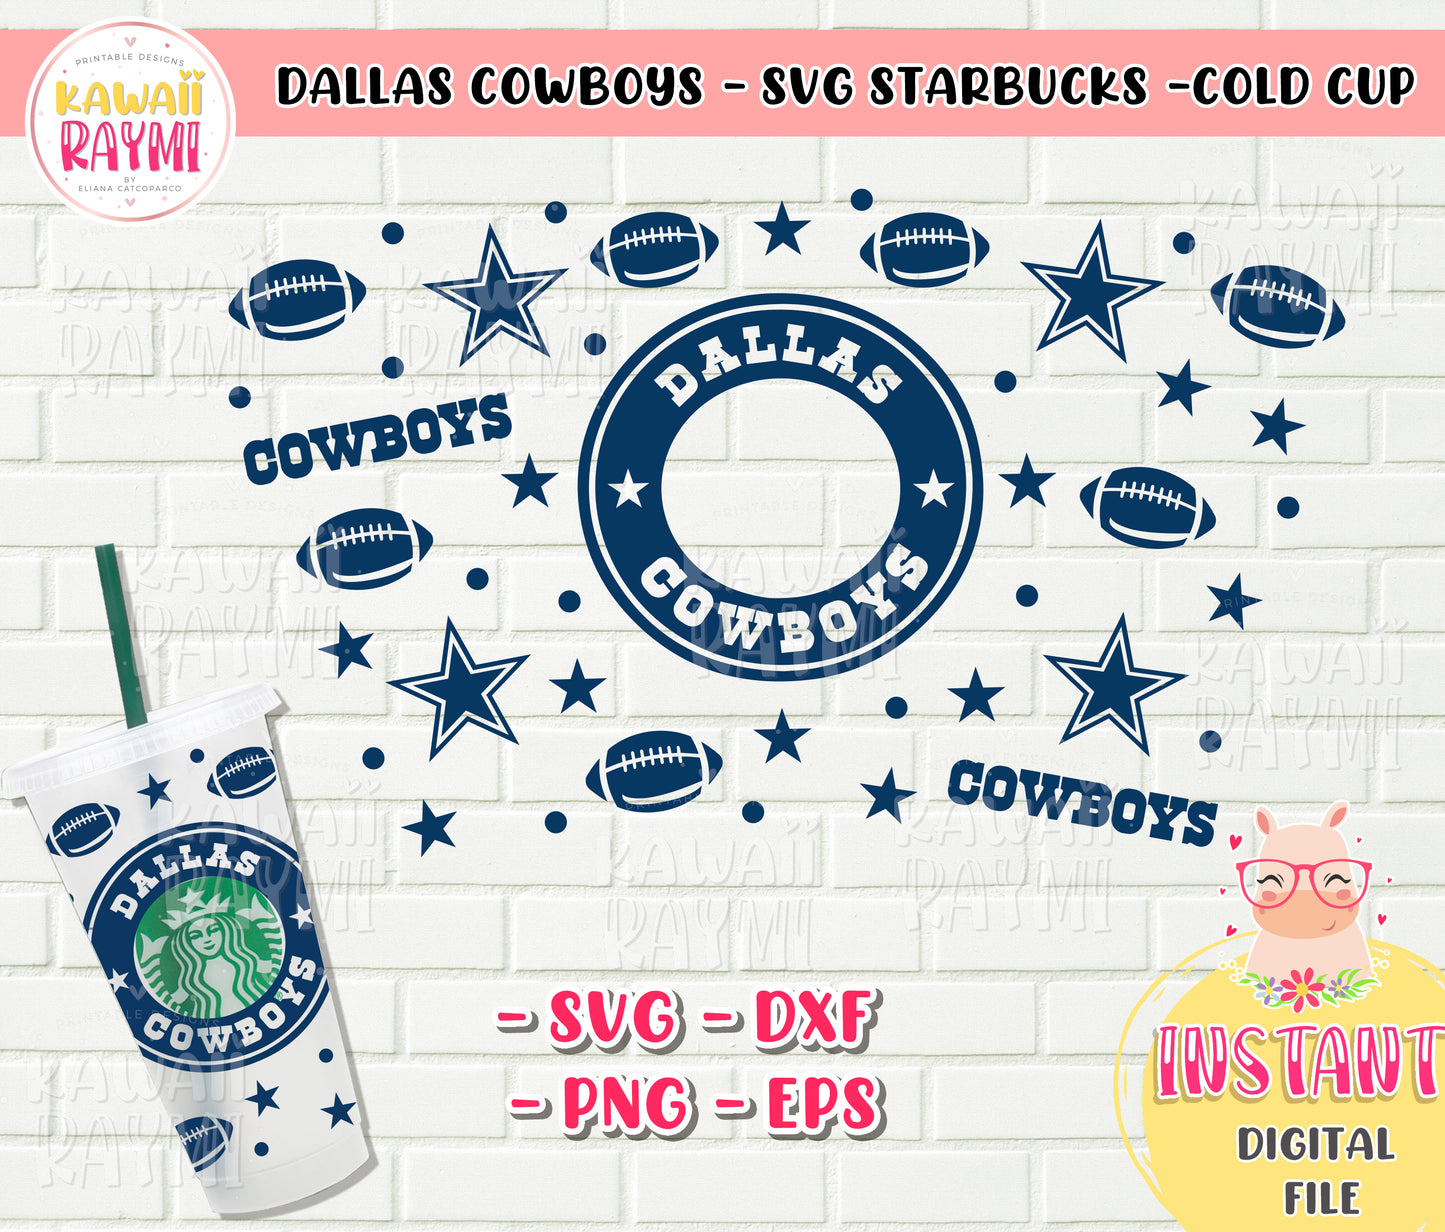 Dallas Cowboys Svg Starbucks cup ,Sport Svg, Football Svg, Starbucks Cowboys,Starbucks Cold Cup Venti Size 24 Oz SVG, DIY Instant Download